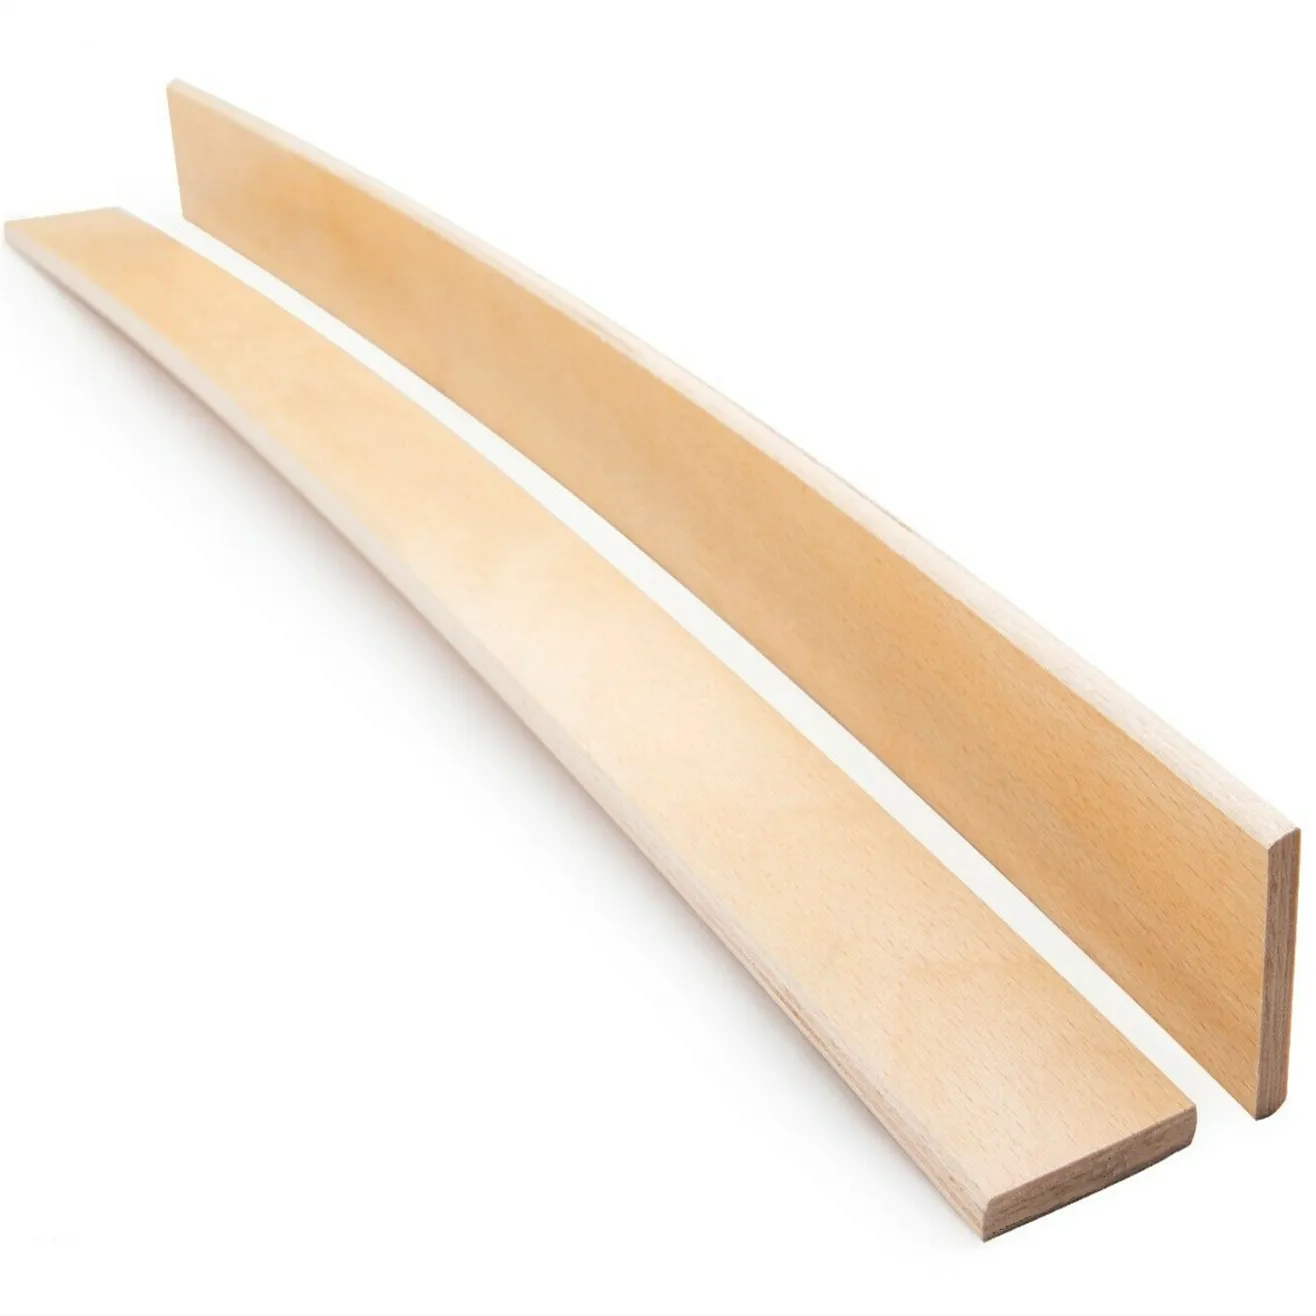 कस्टम उच्च गुणवत्ता वाली लकड़ी के स्लेट सोफे बिस्तर